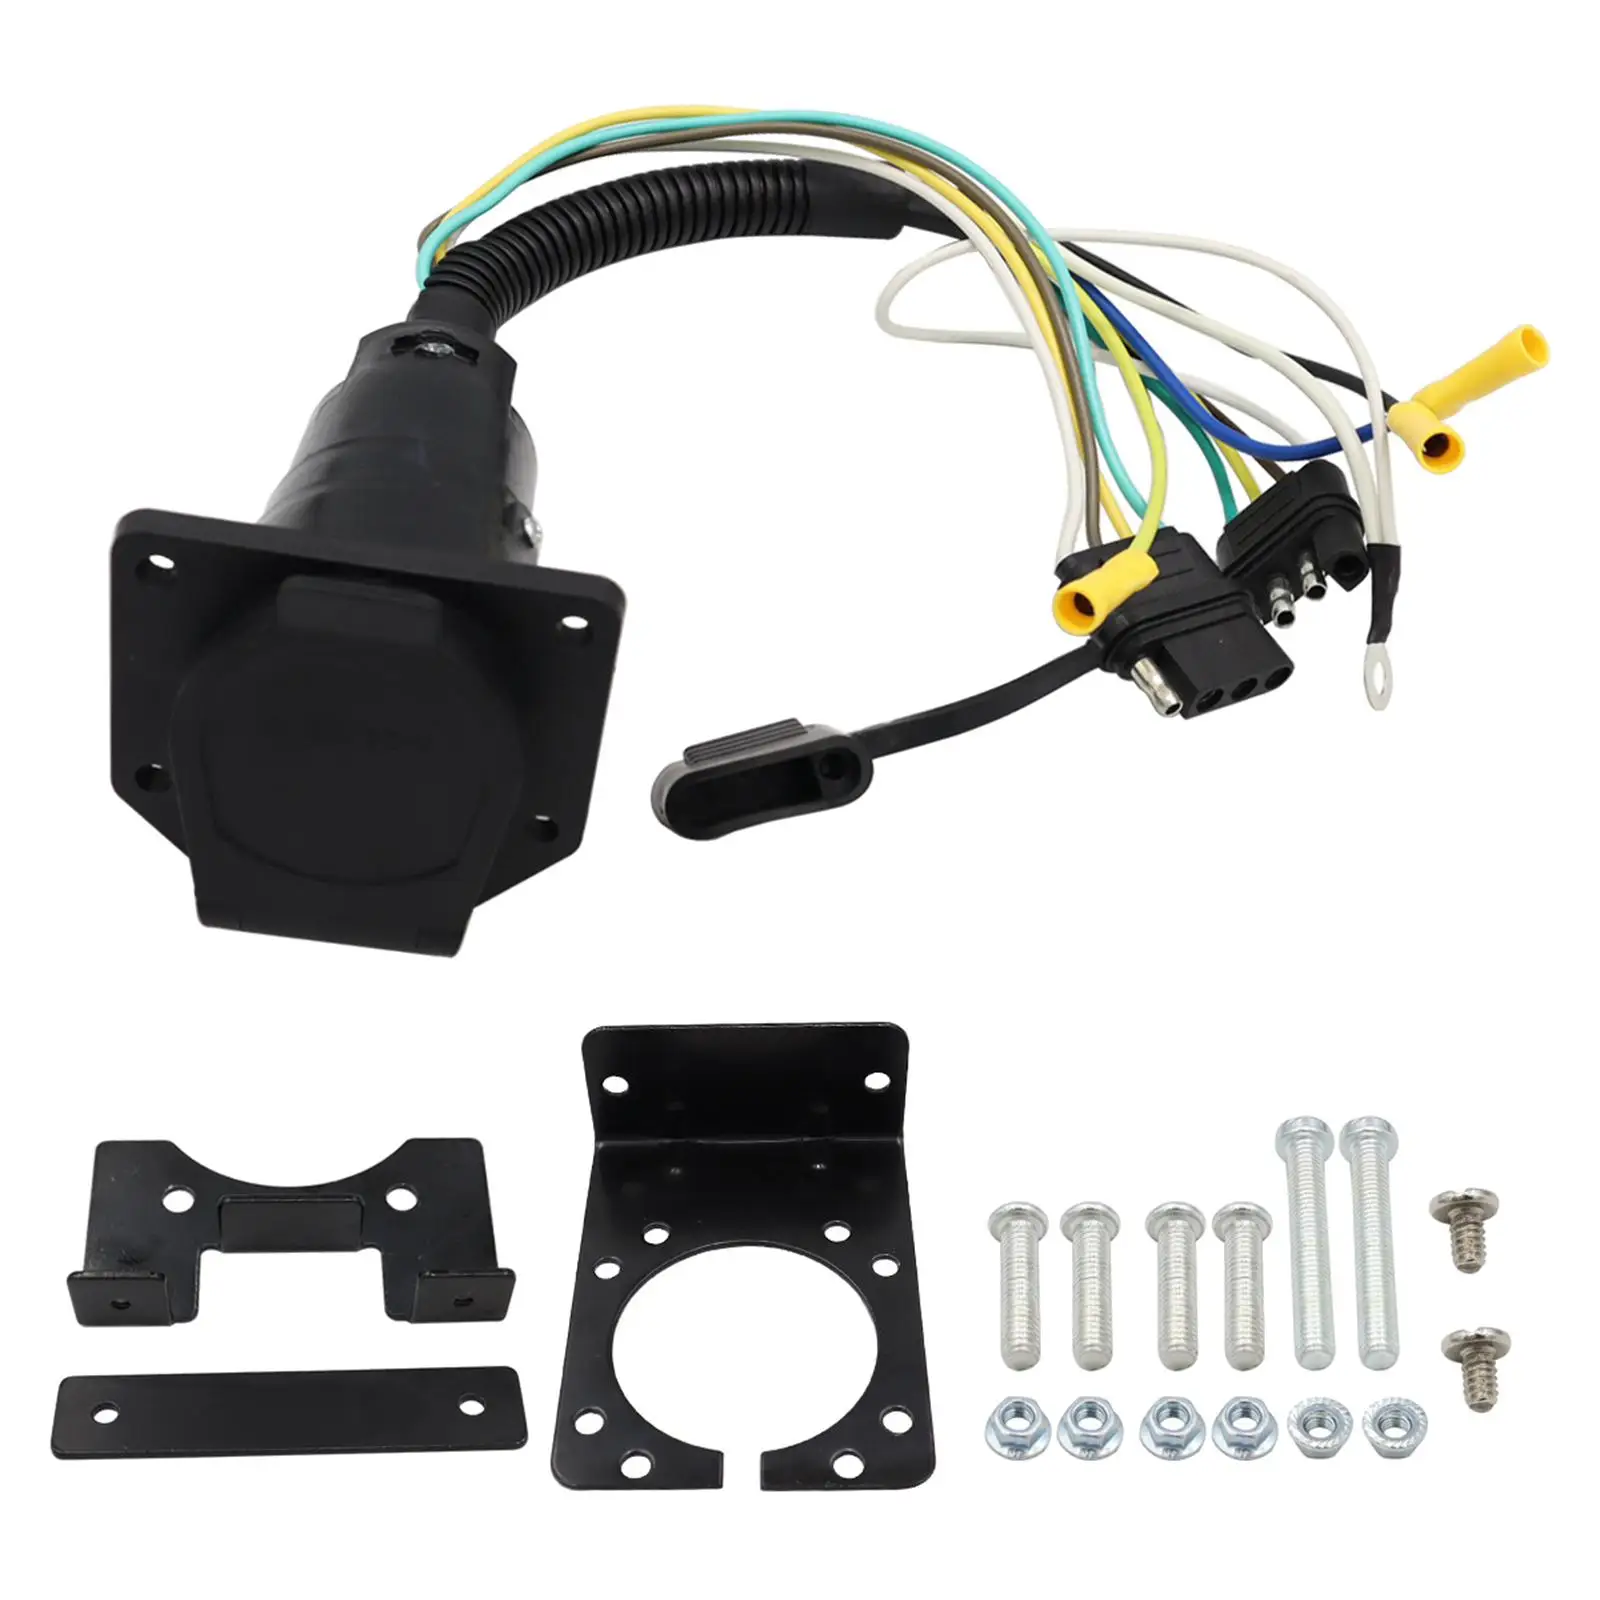 RV Trailer Adapter Plug Easy Installation Professional for Motorhome